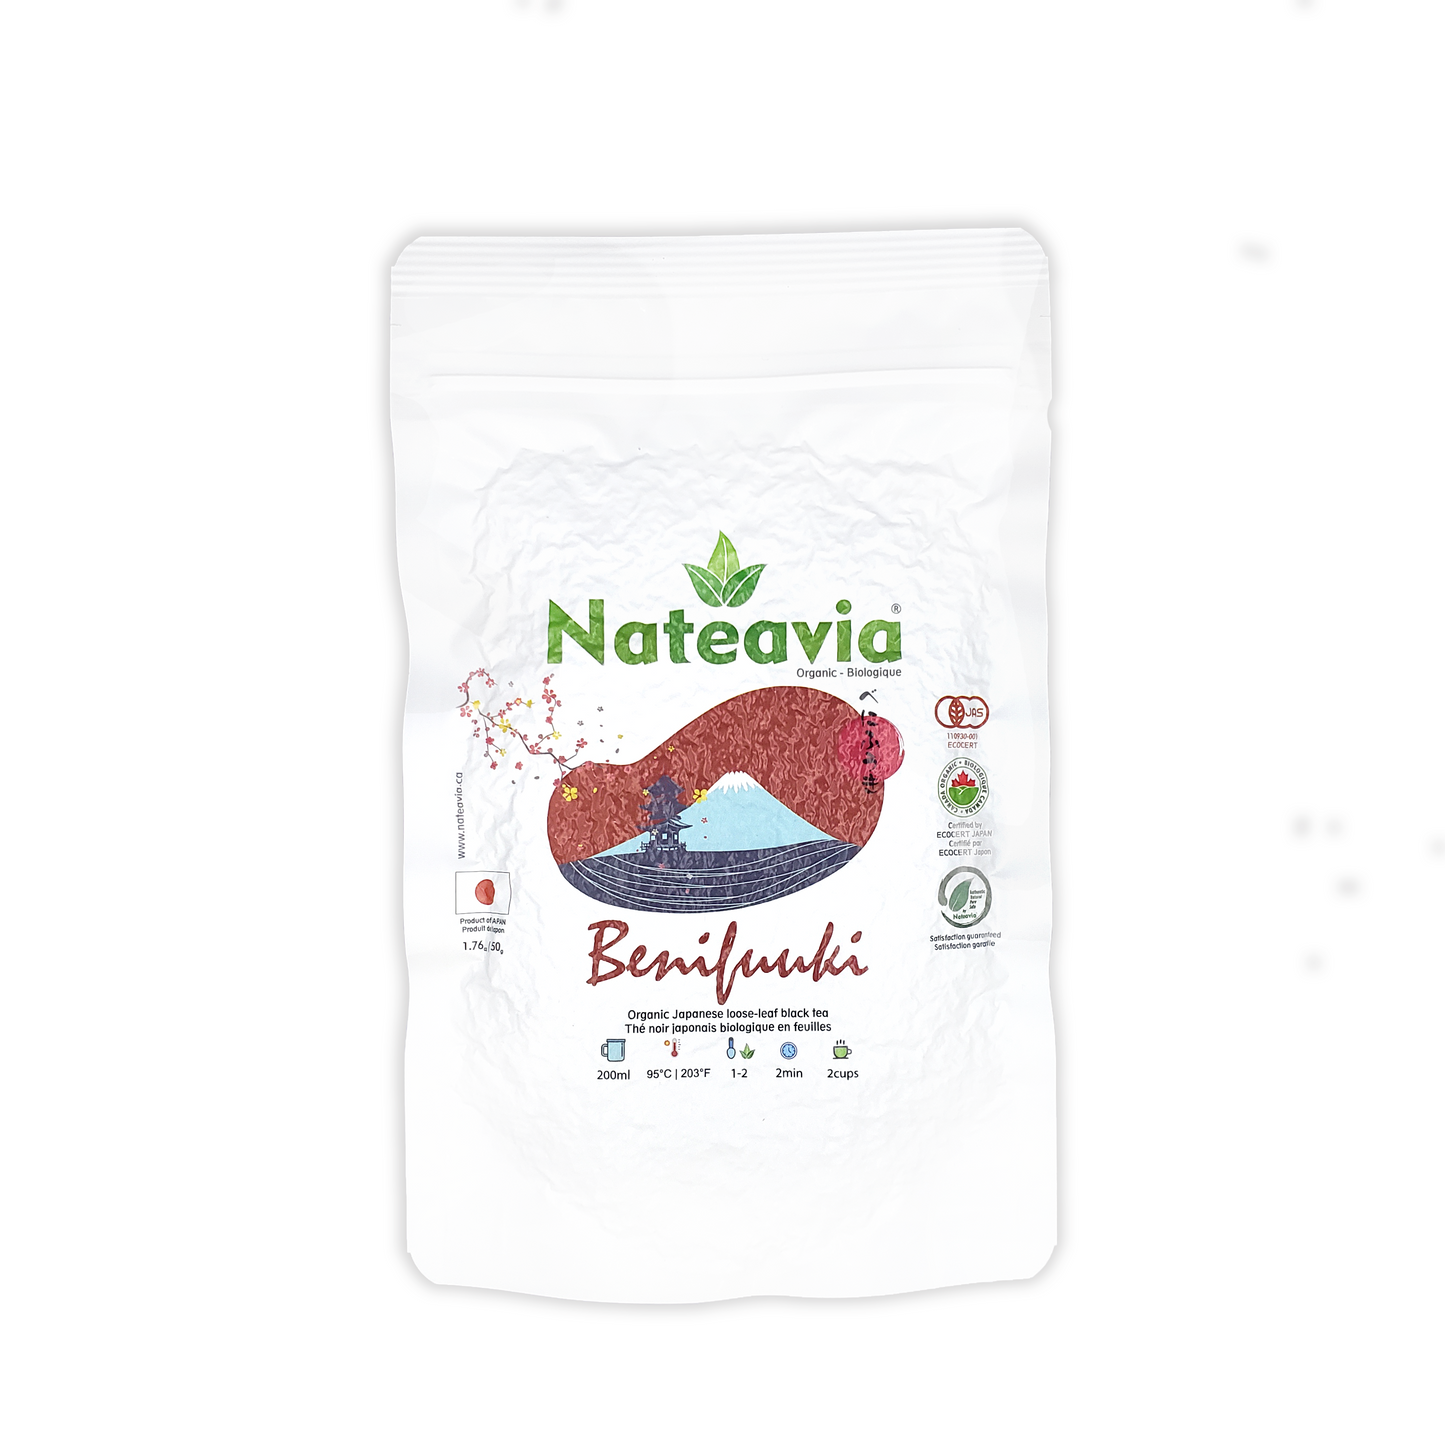 Nateavia Benifuuki - Premium Organic Japanese Loose Leaf Black Tea - Light and Smooth taste - Authentic Japanese Origin, from Shizuoka  - 50g